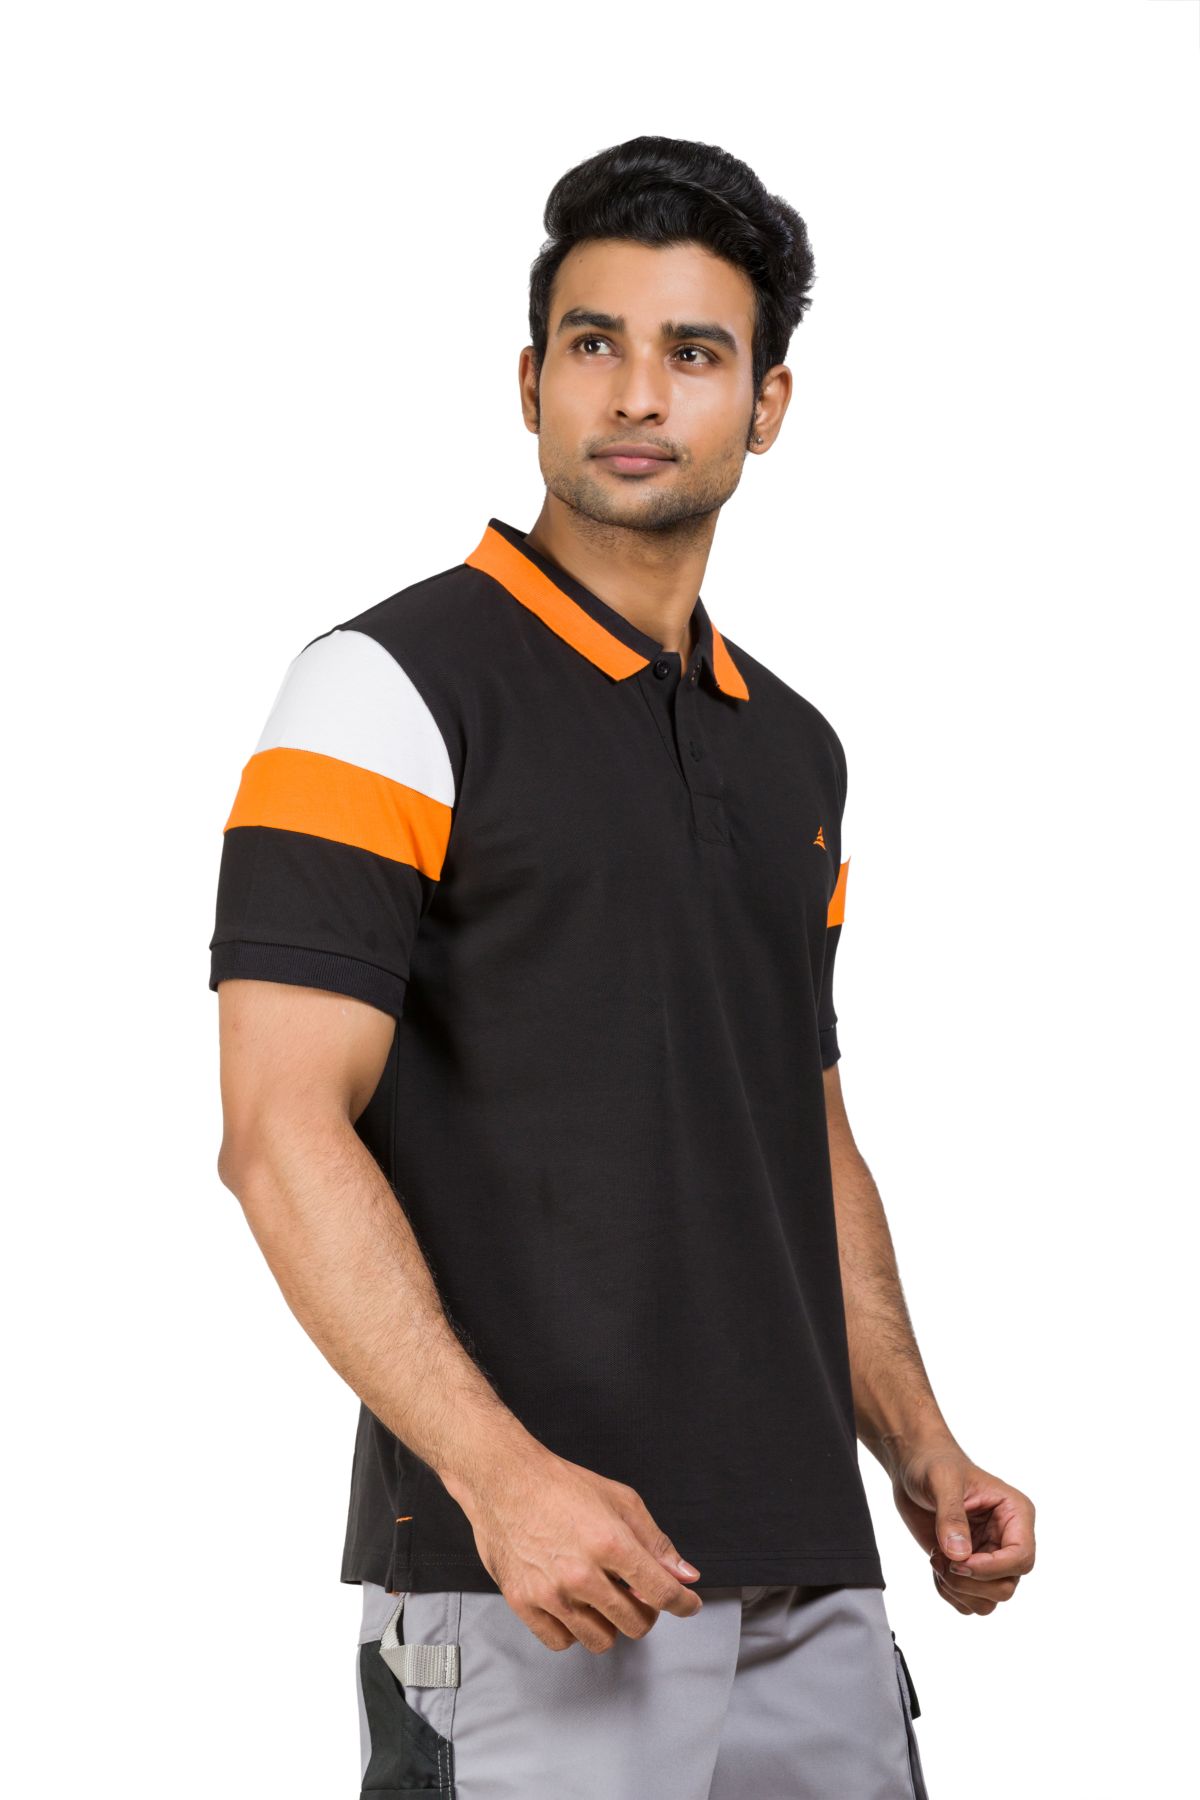 Cotton Blend Polo T-shirt Black-Orange-White for Men